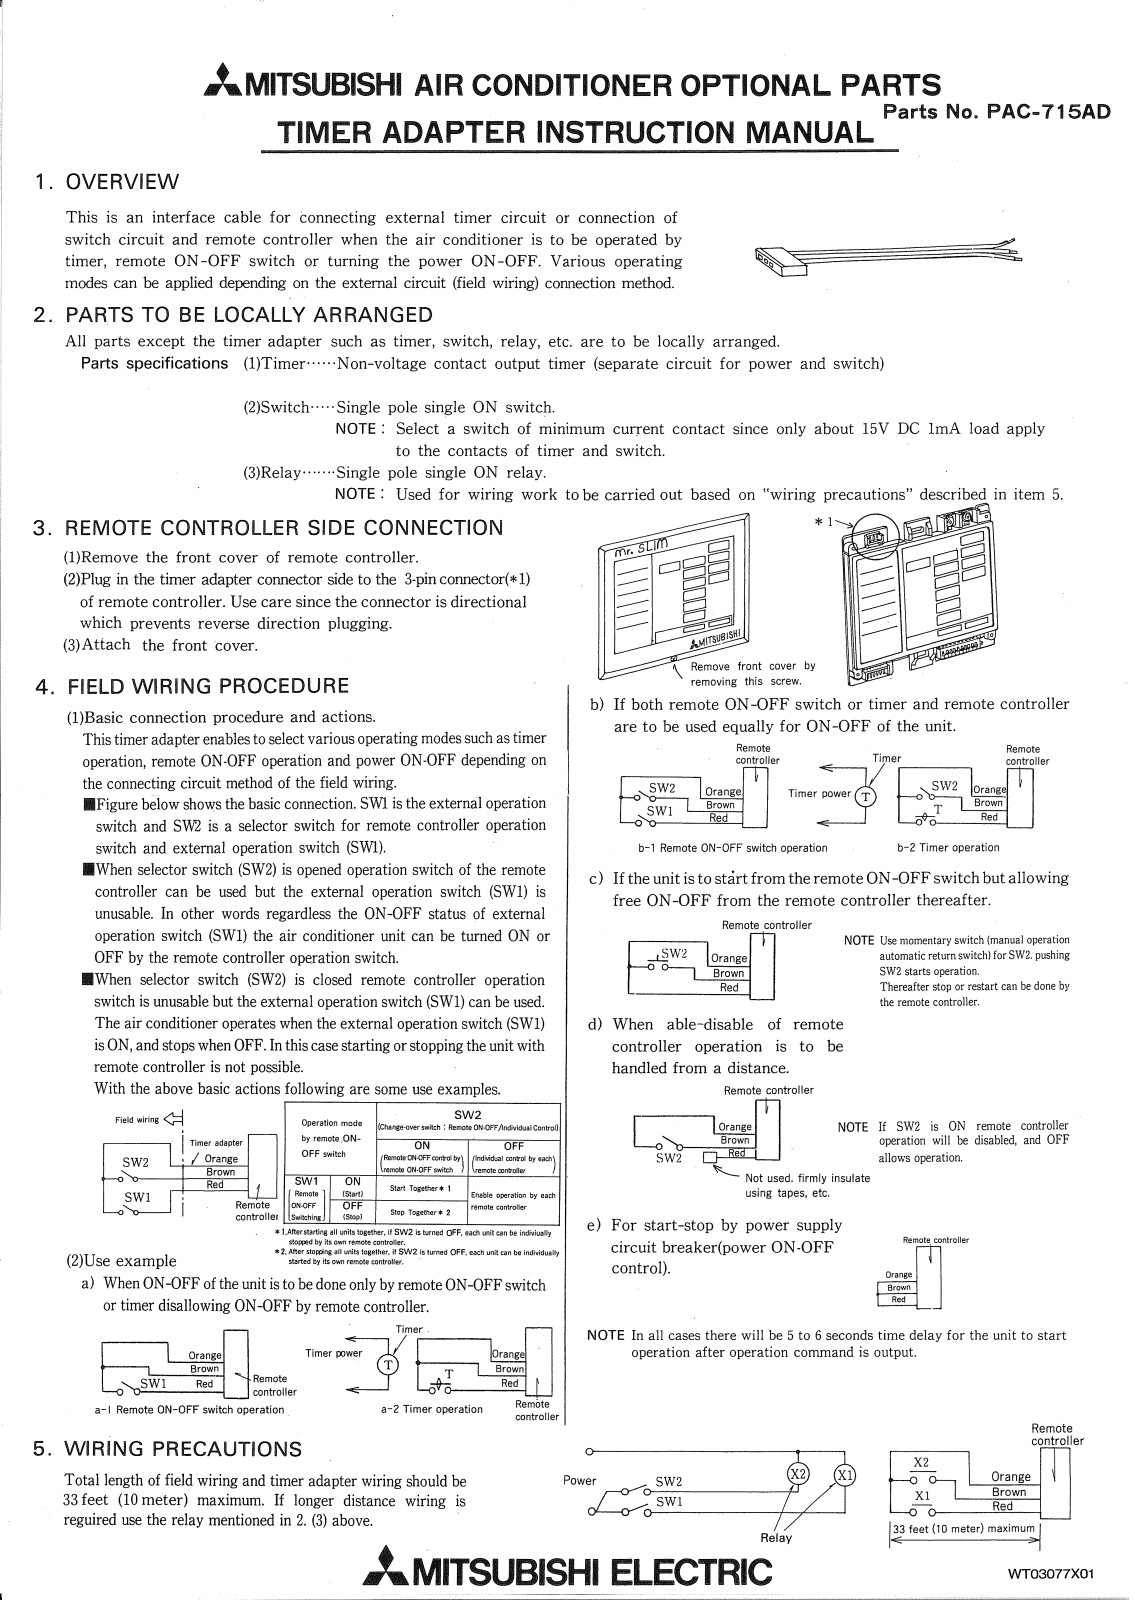 Mitsubishi PAC-715AD Installation Manual